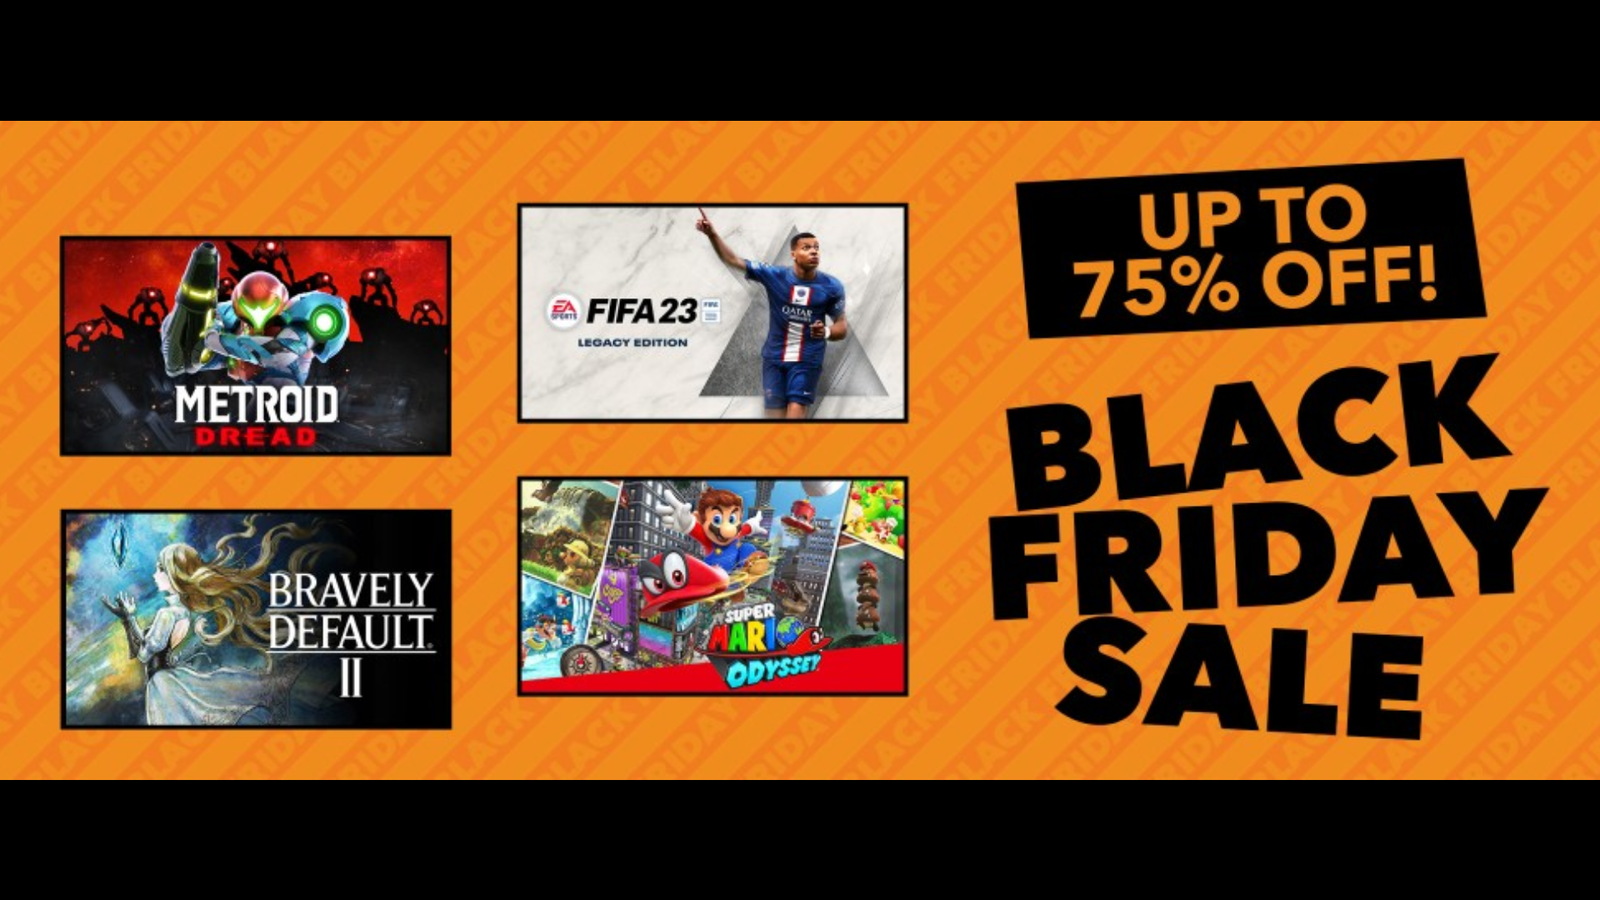 Nintendo eShop Black Friday sale now on! 